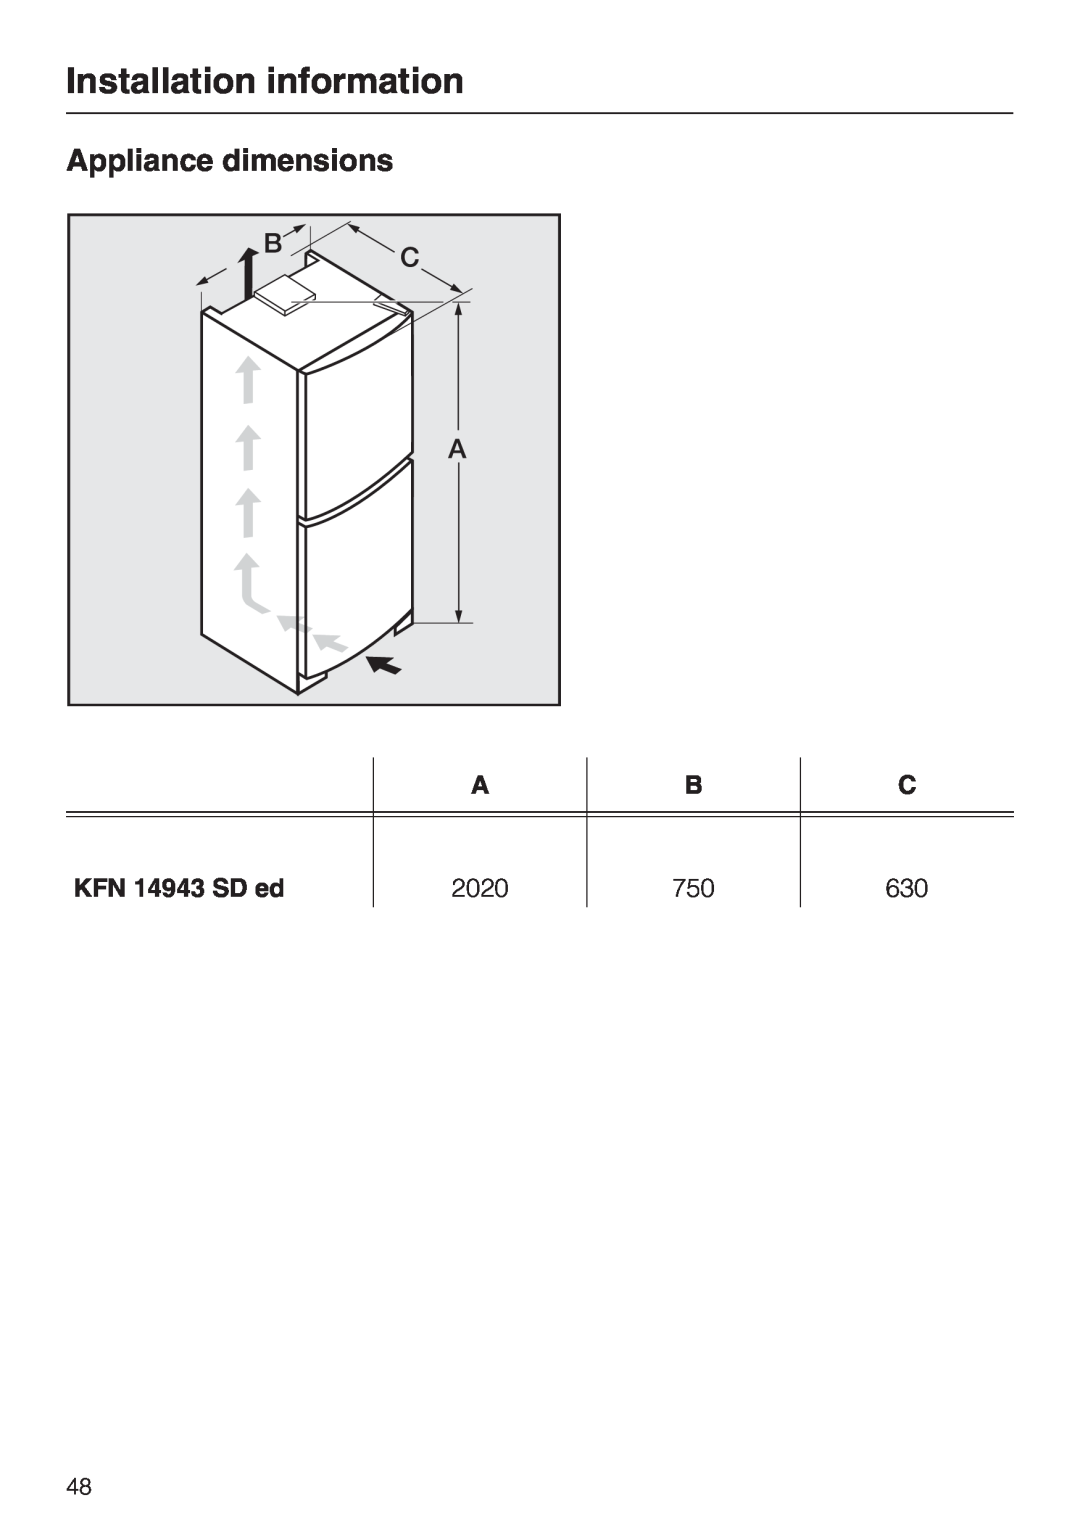 Miele KFN 14943 SD ED installation instructions Appliance dimensions, KFN 14943 SD ed, Installation information 